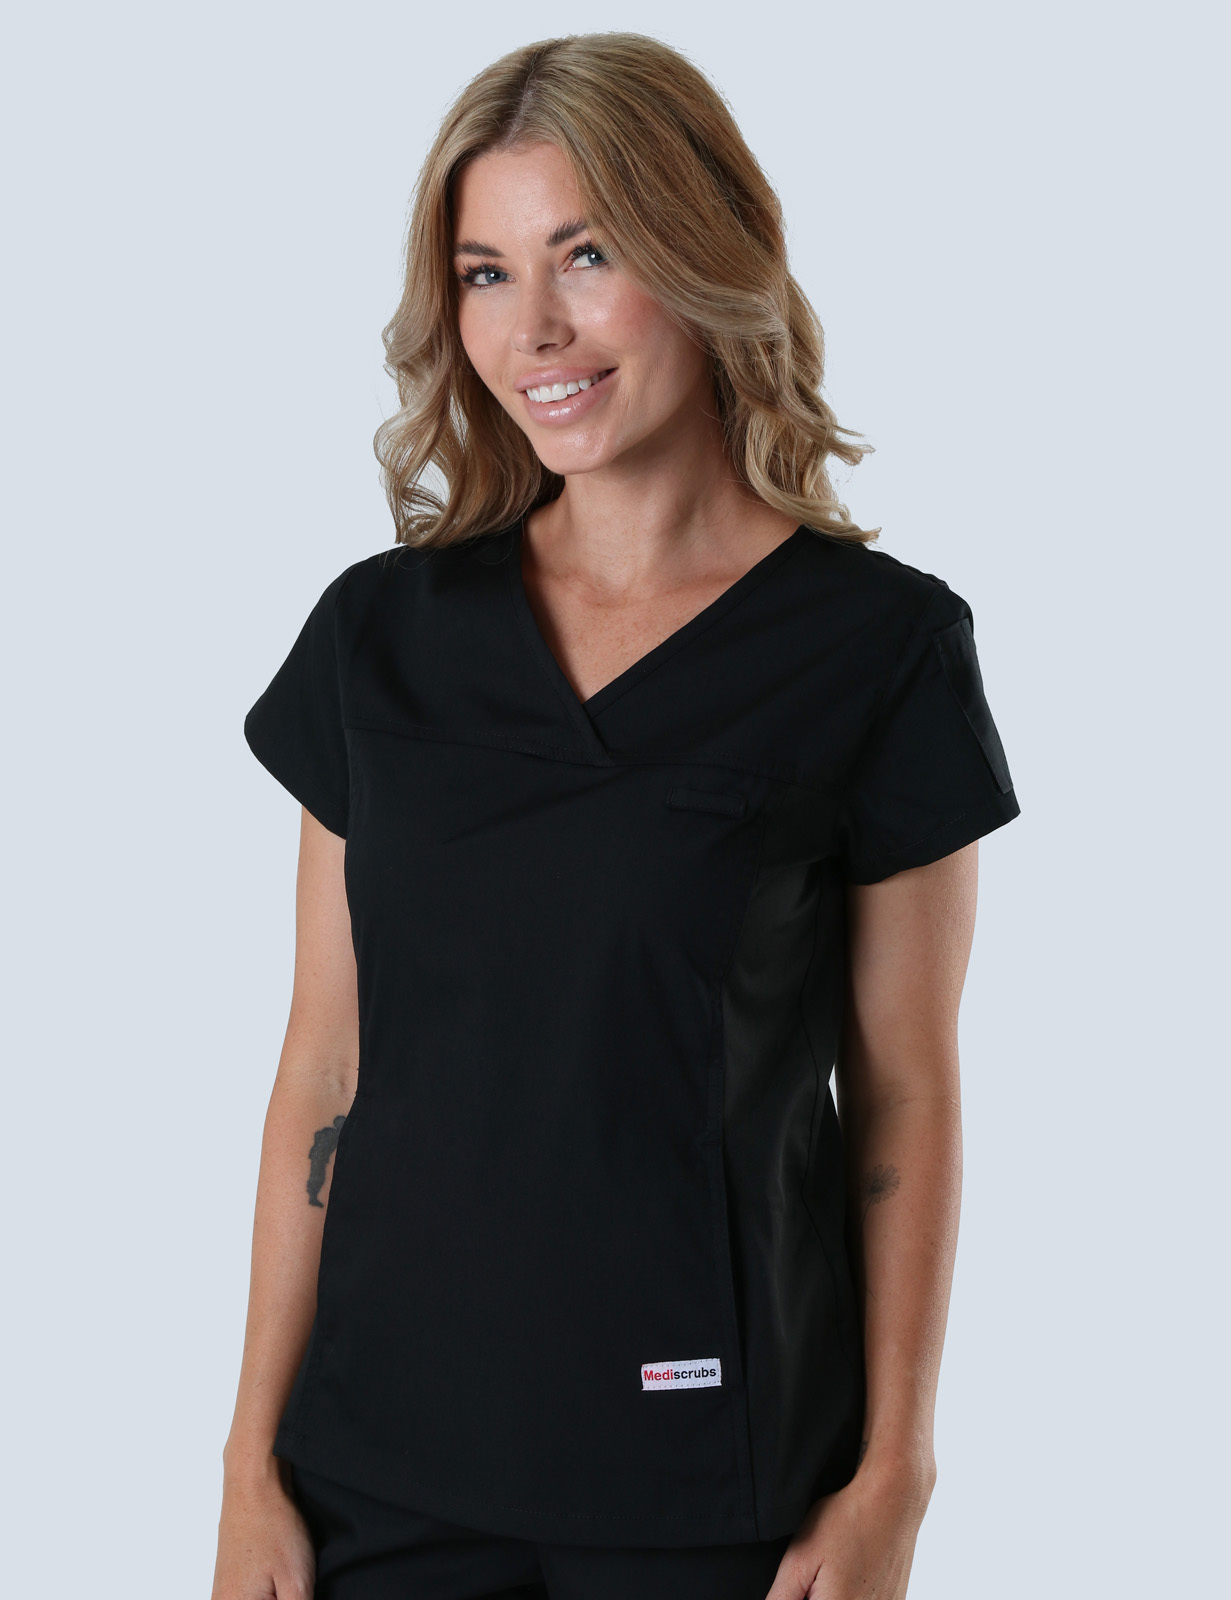 Logan Hospital - Medical Imaging (Women's Fit Spandex Scrub Top in Black incl Logos)